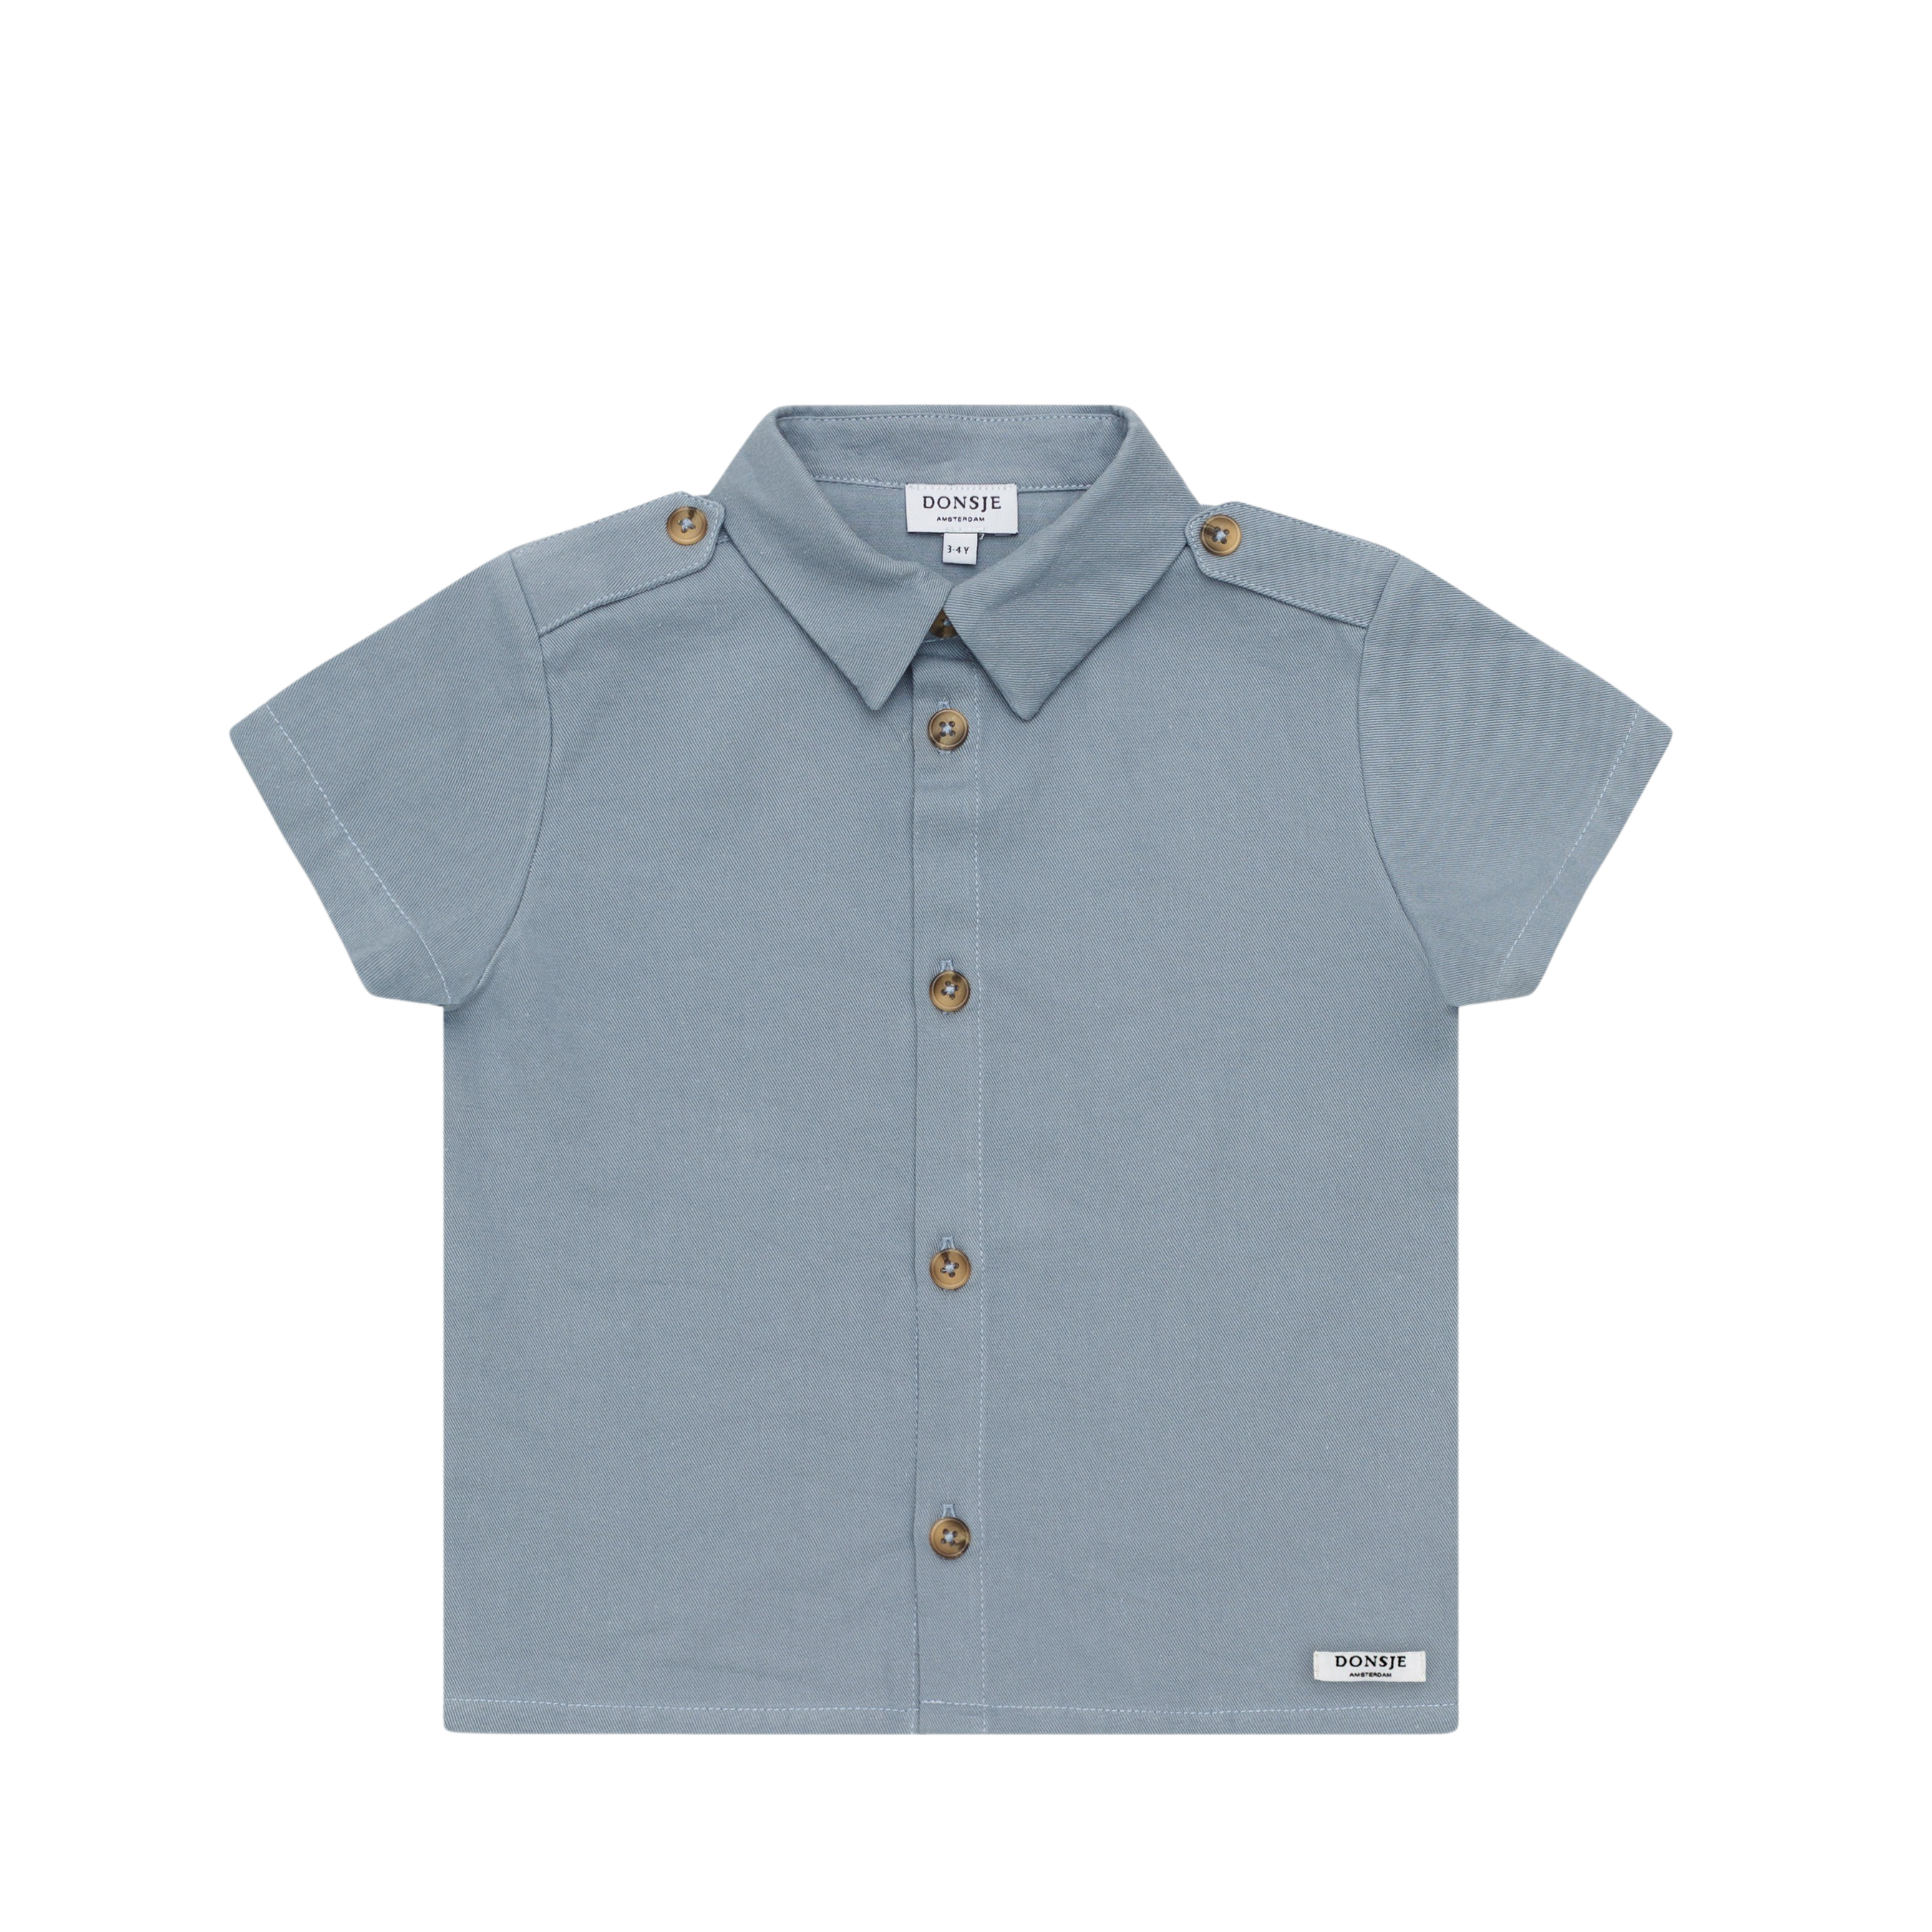 Moers Shirt | Foggy Blue